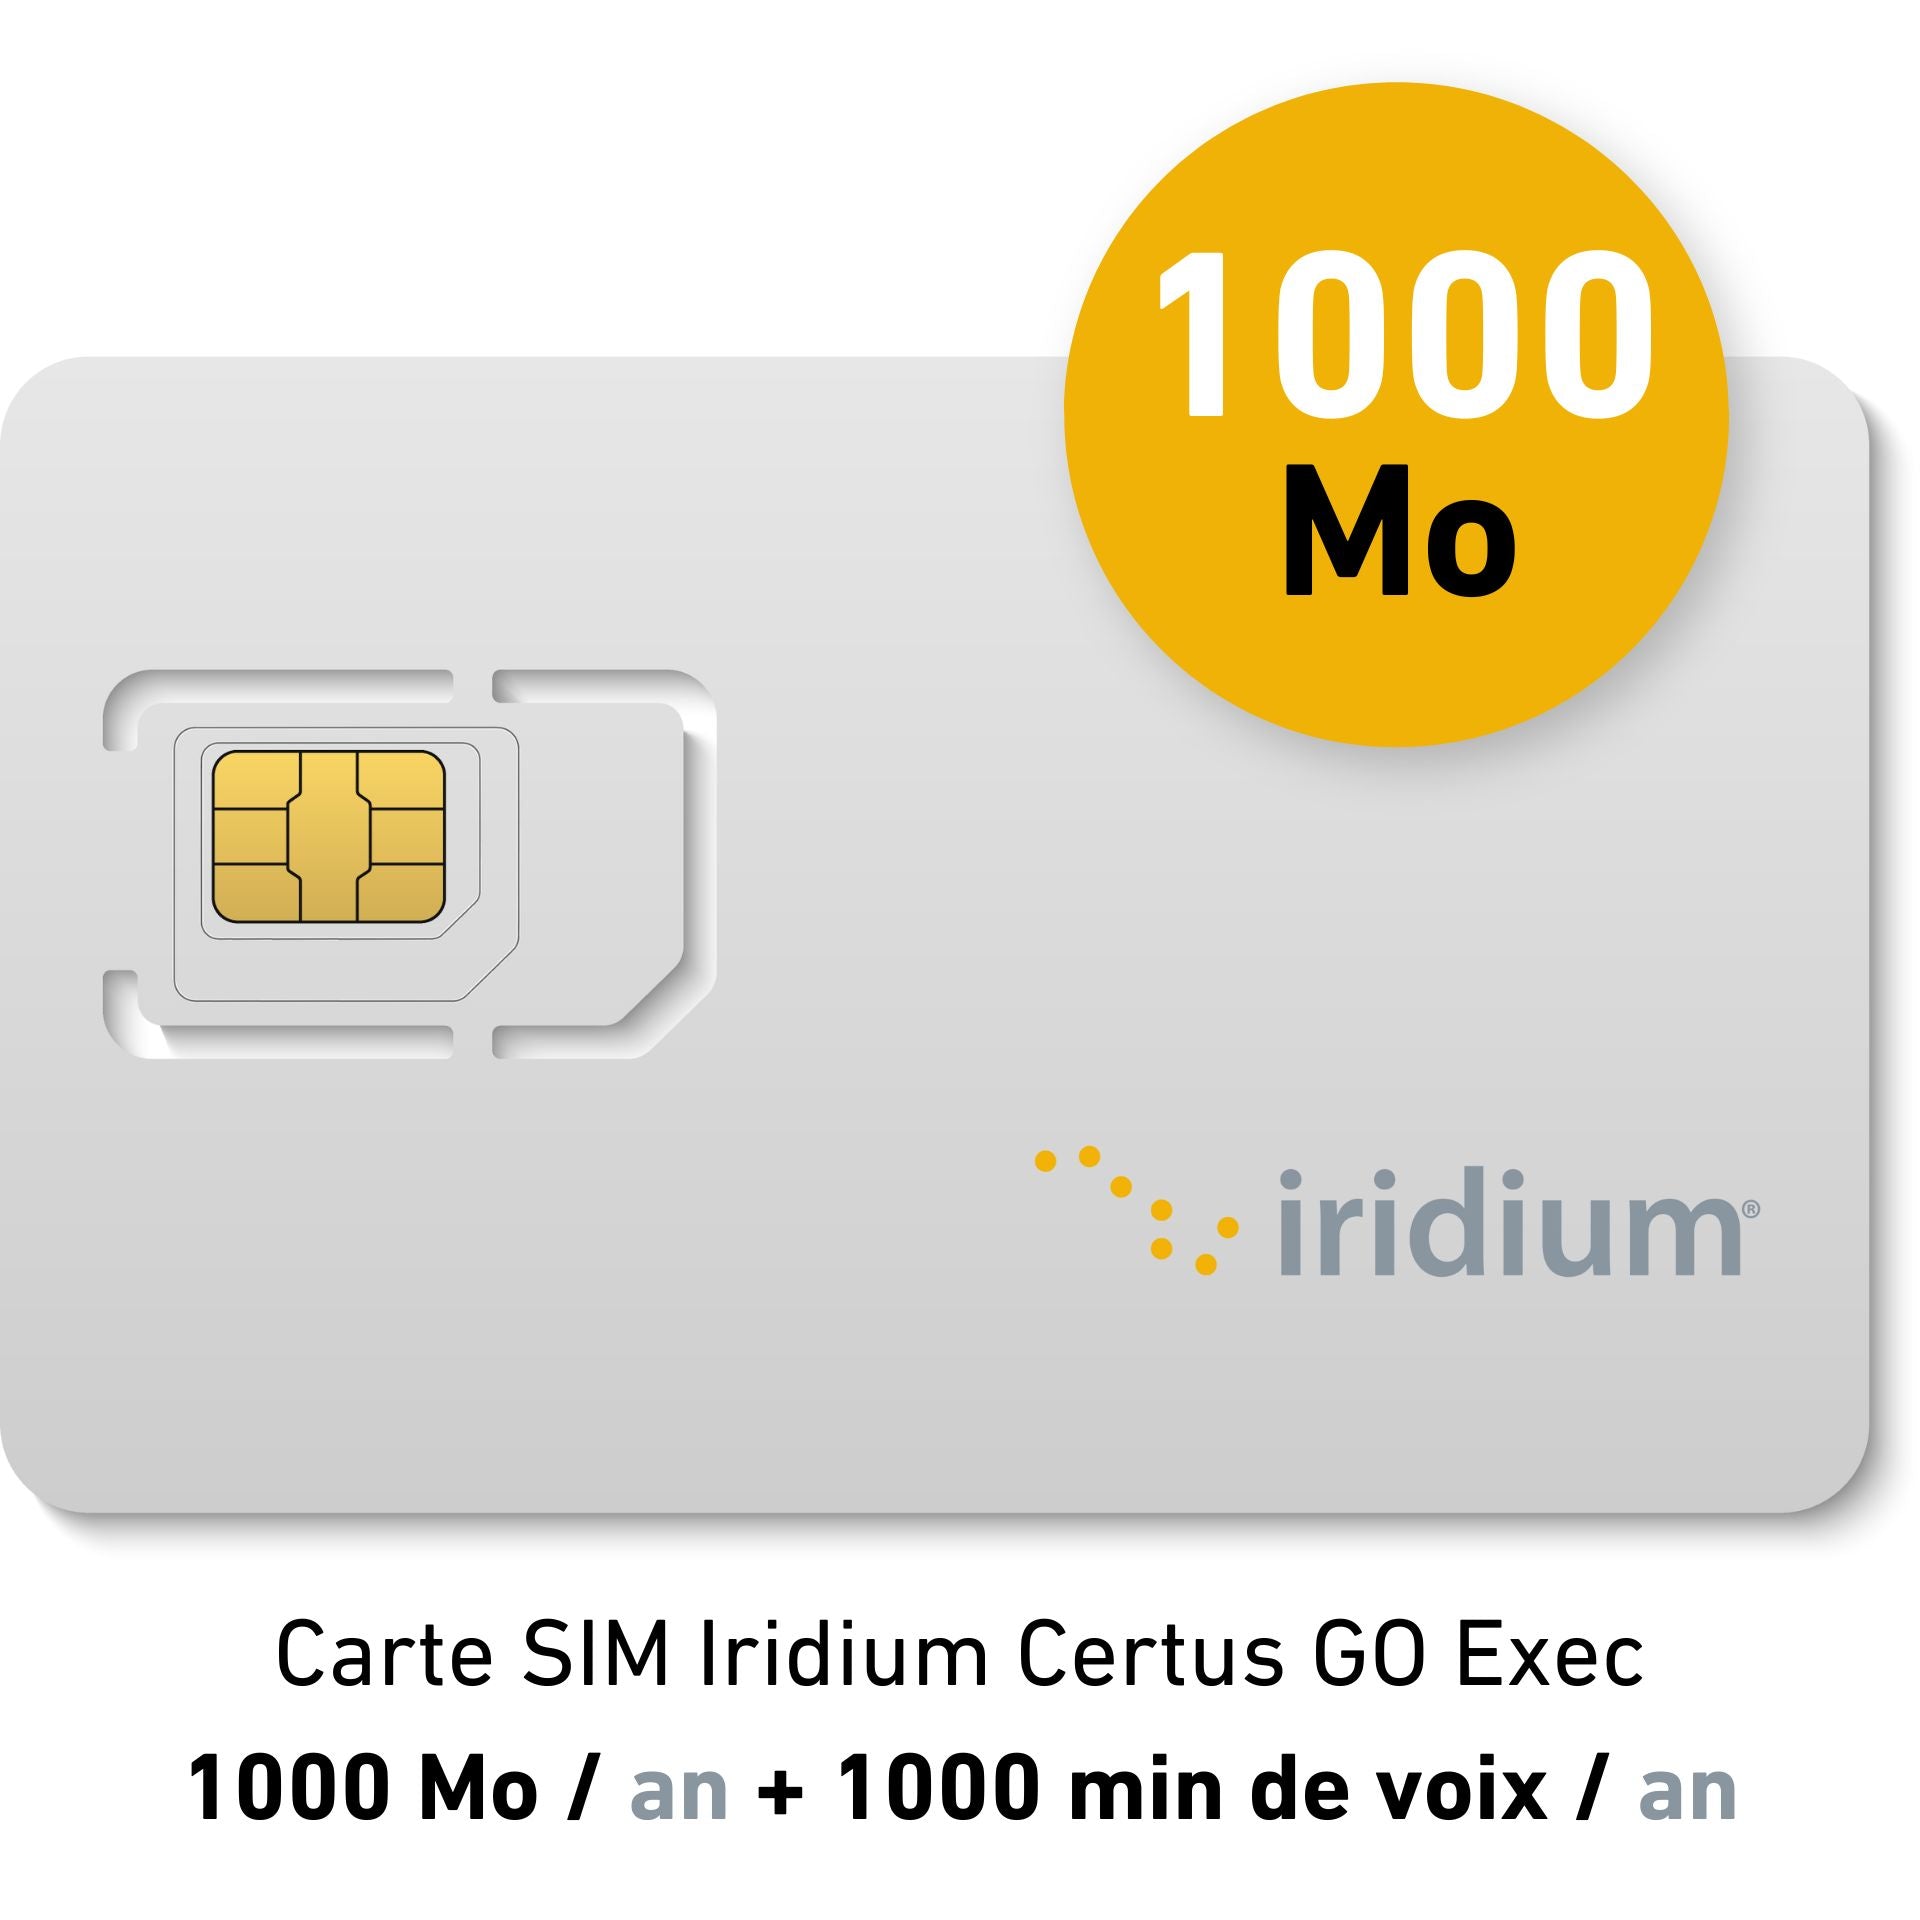 Abonnement Plaisance Annuel Iridium Certus GO Exec - 1000Mo/an + 1000 min de voix/an